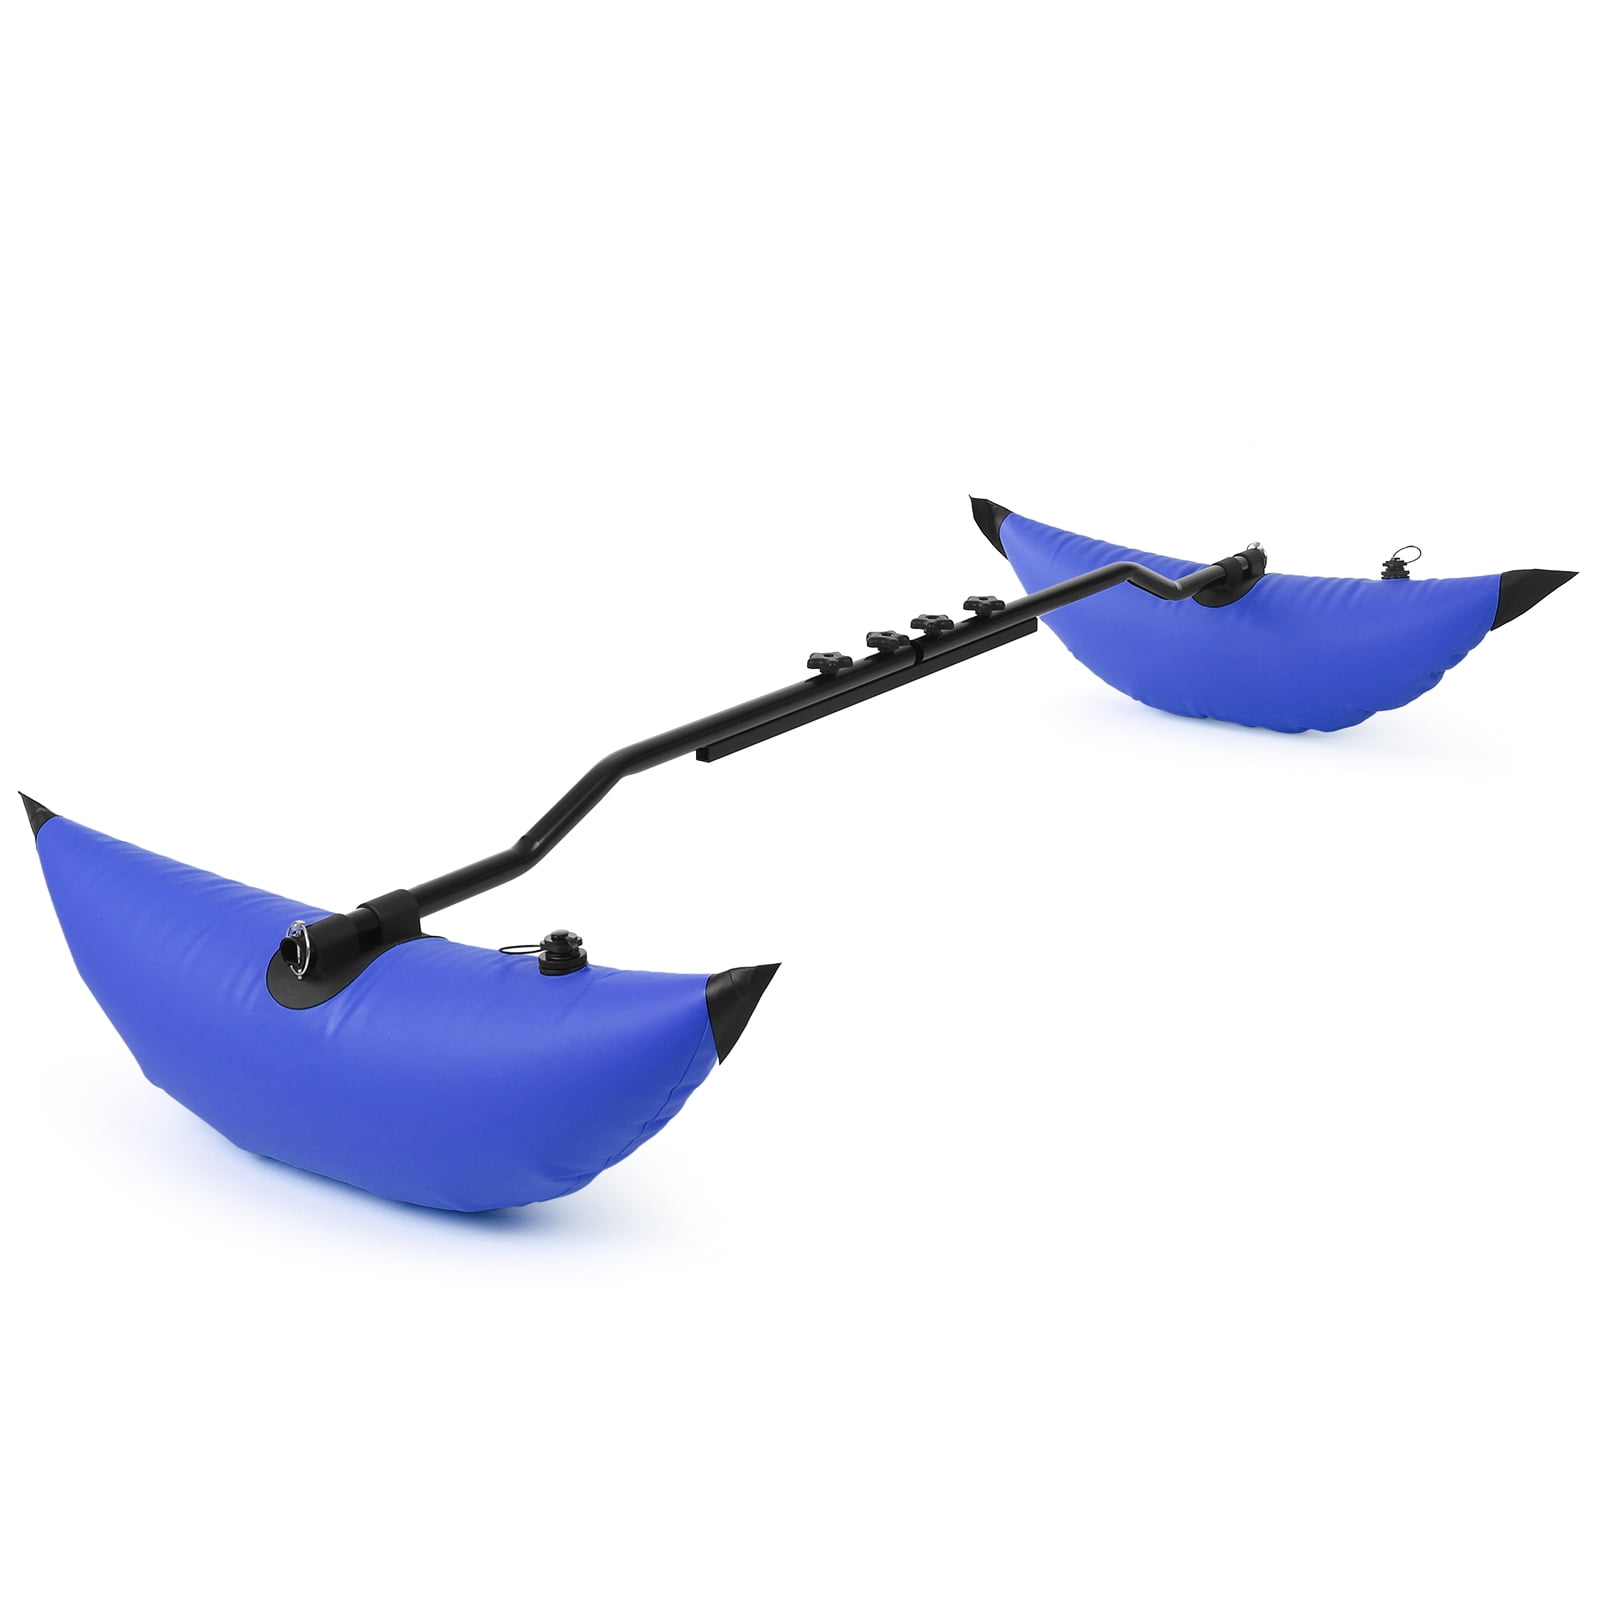 Lixada Kayak PVC Inflatable Outrigger Float with Sidekick Arms Rod